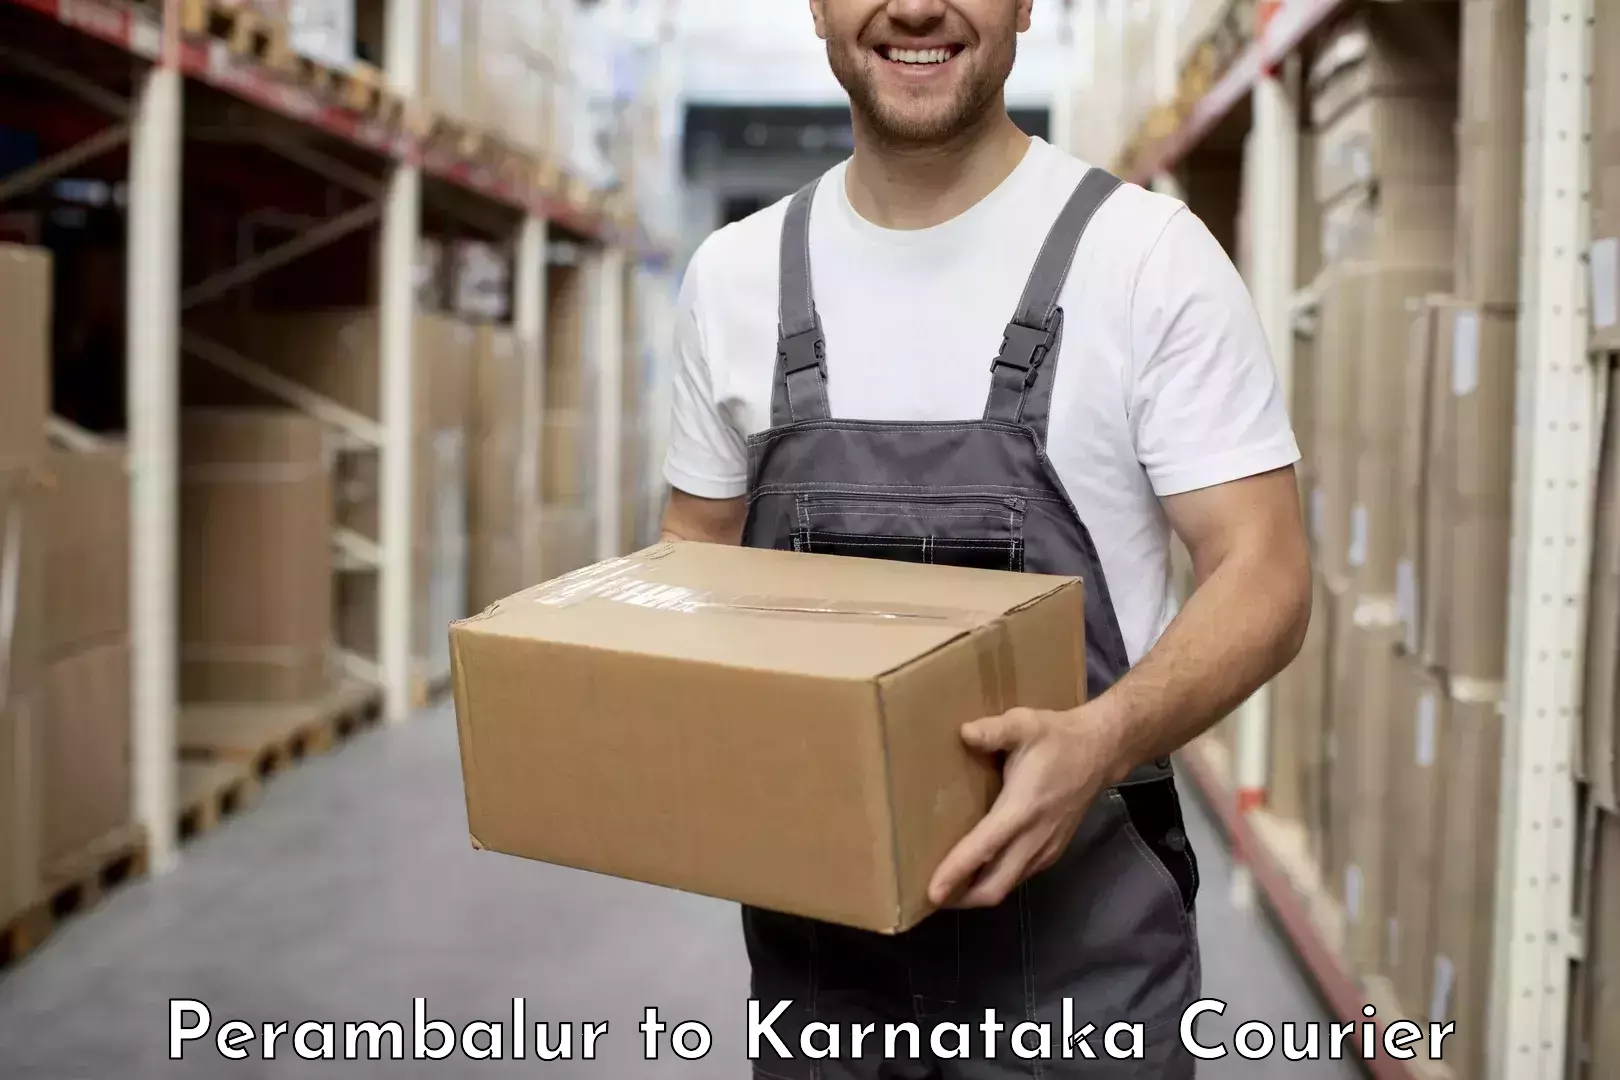 Doorstep delivery service Perambalur to Kulshekar